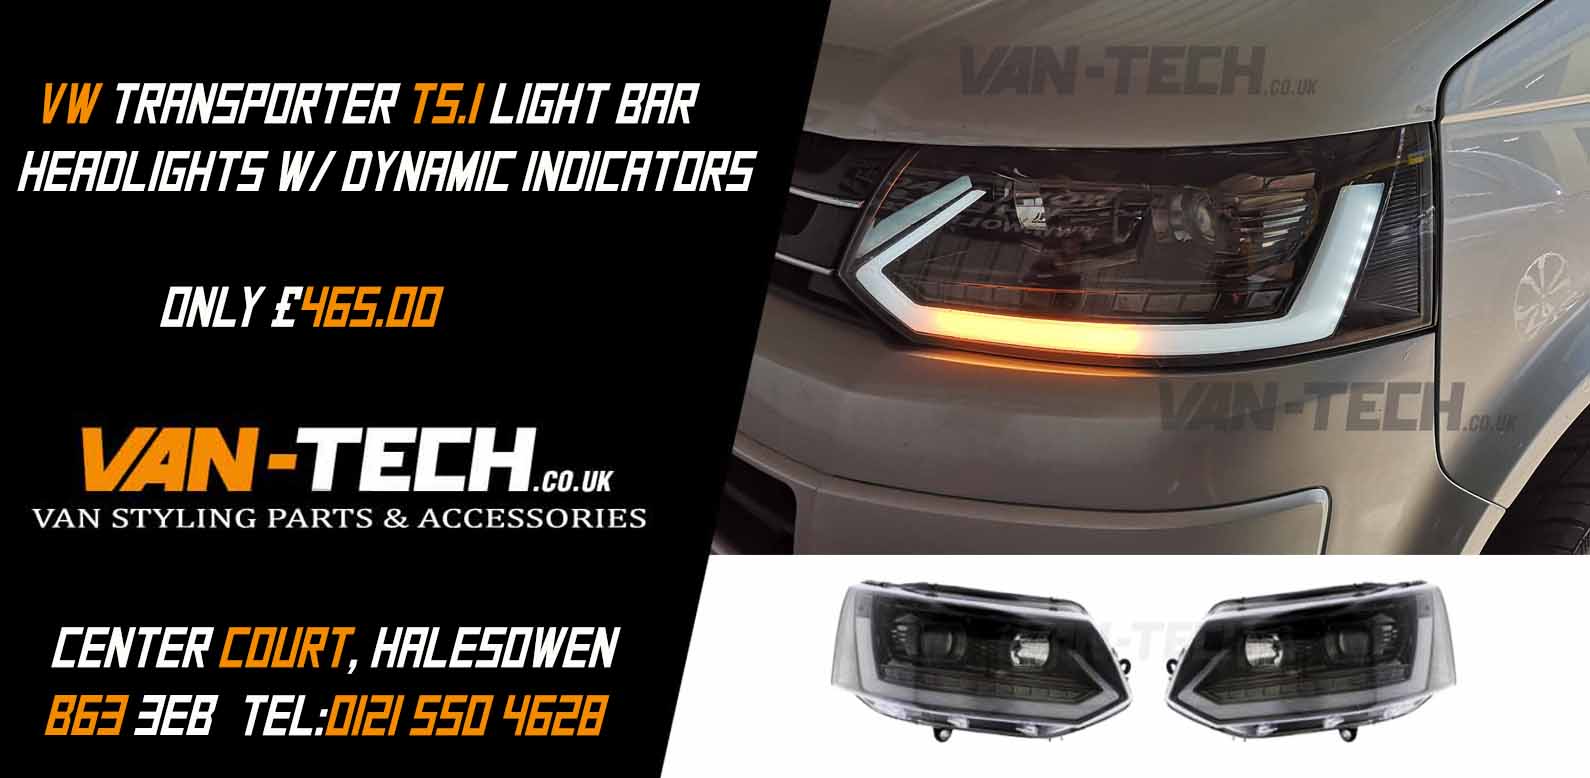 VW Transporter T5.1 Light Bar Headlights Dynamic Indicators